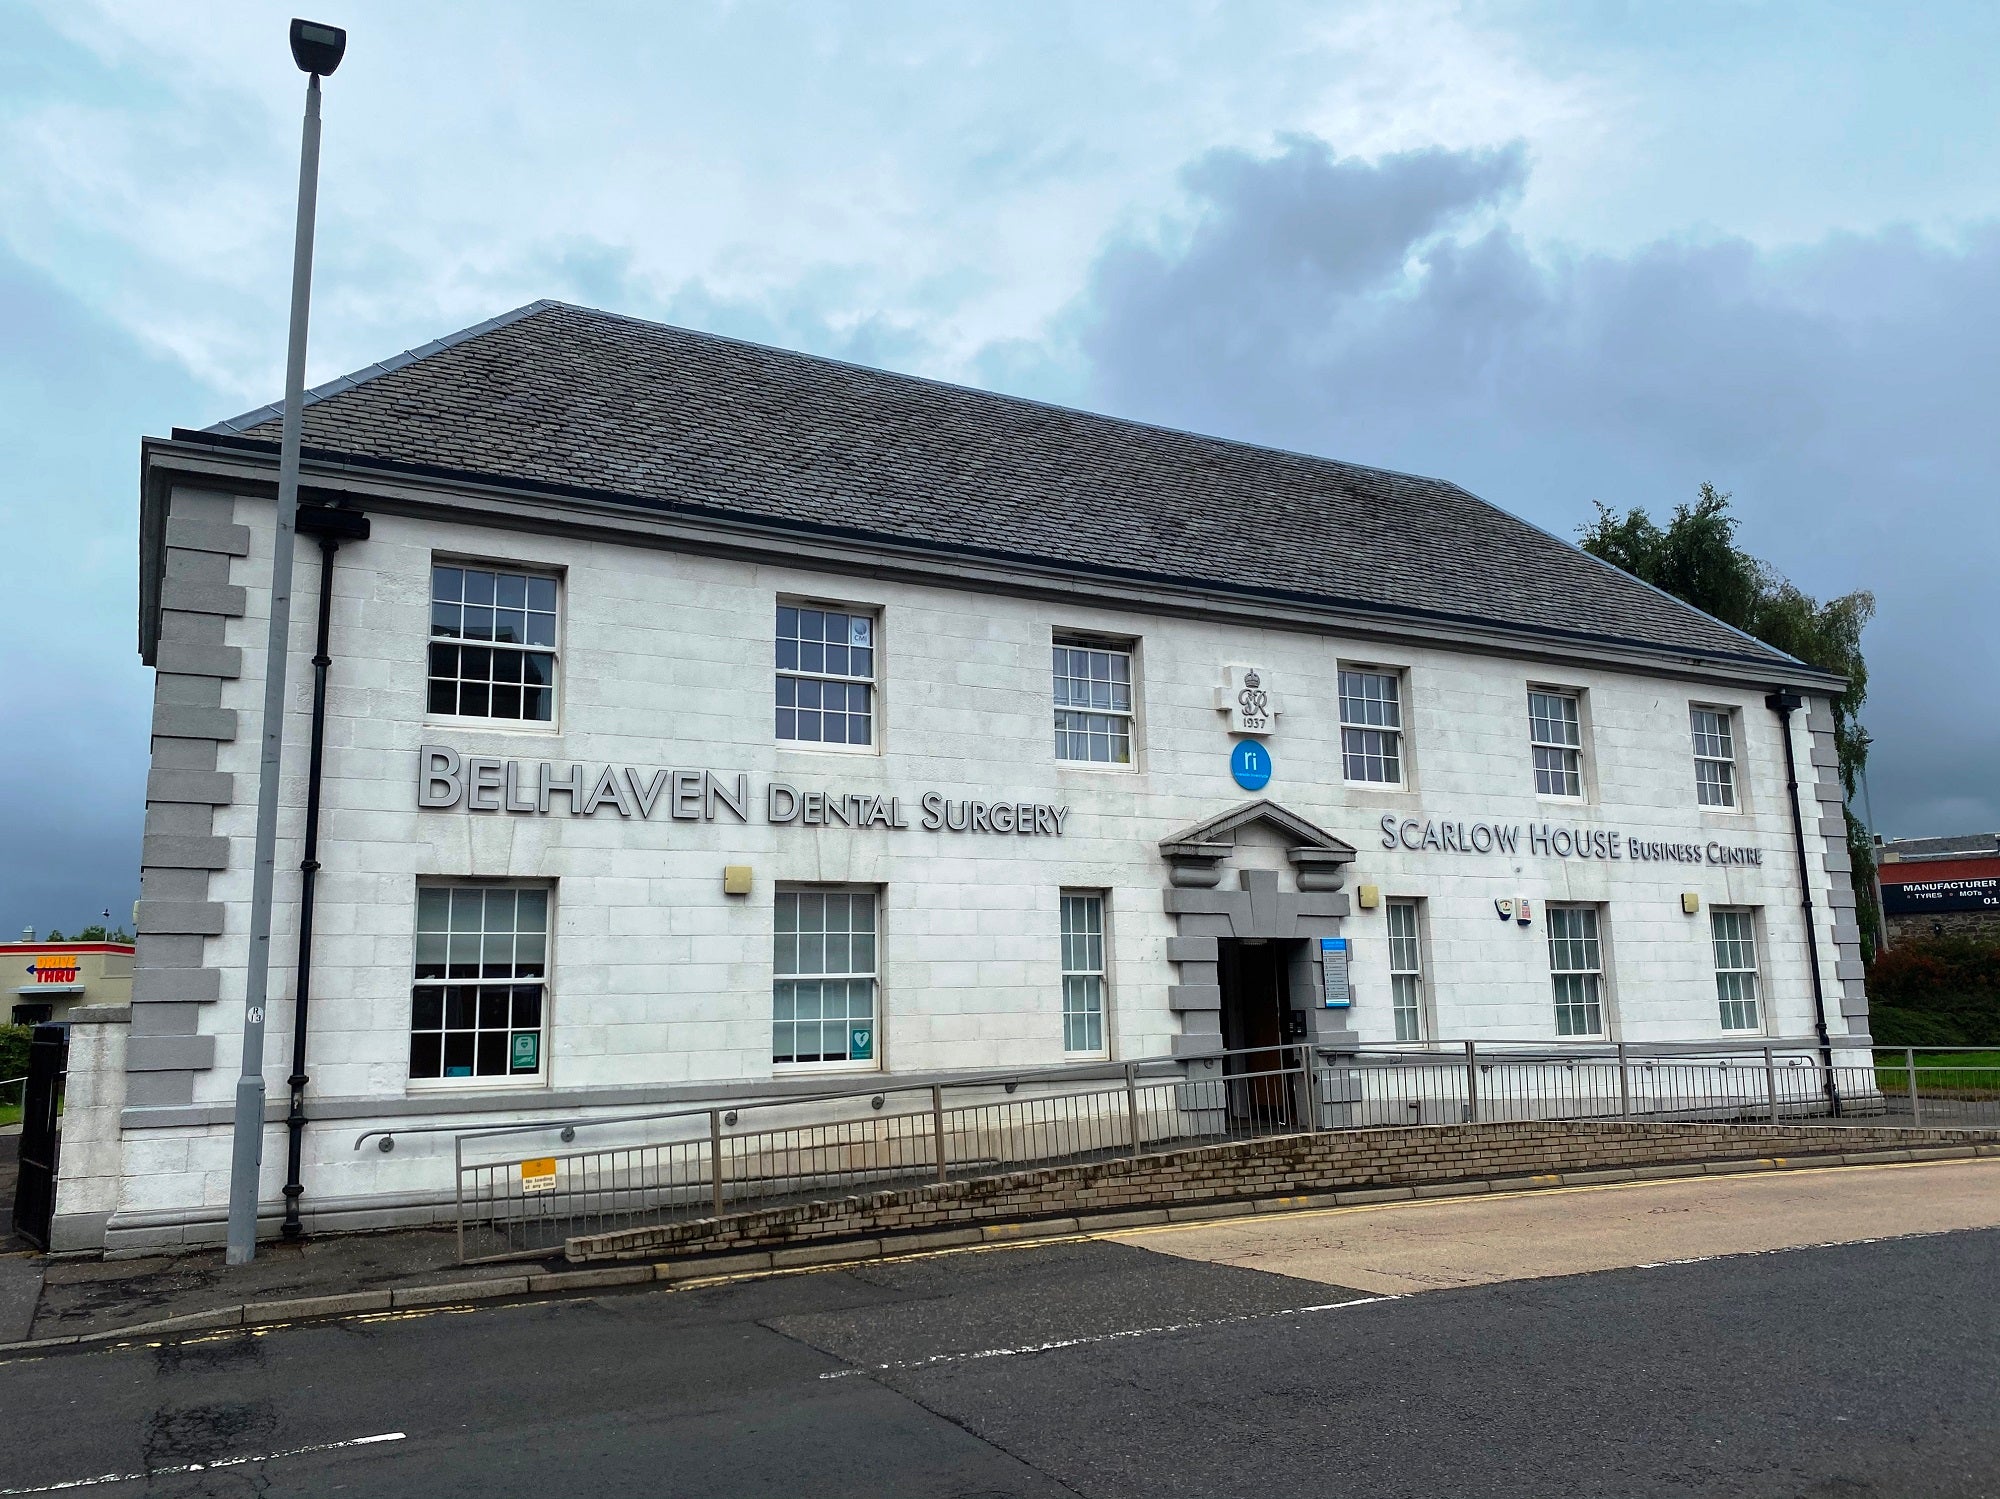 Belhaven Dental Surgery in Port Glasgow